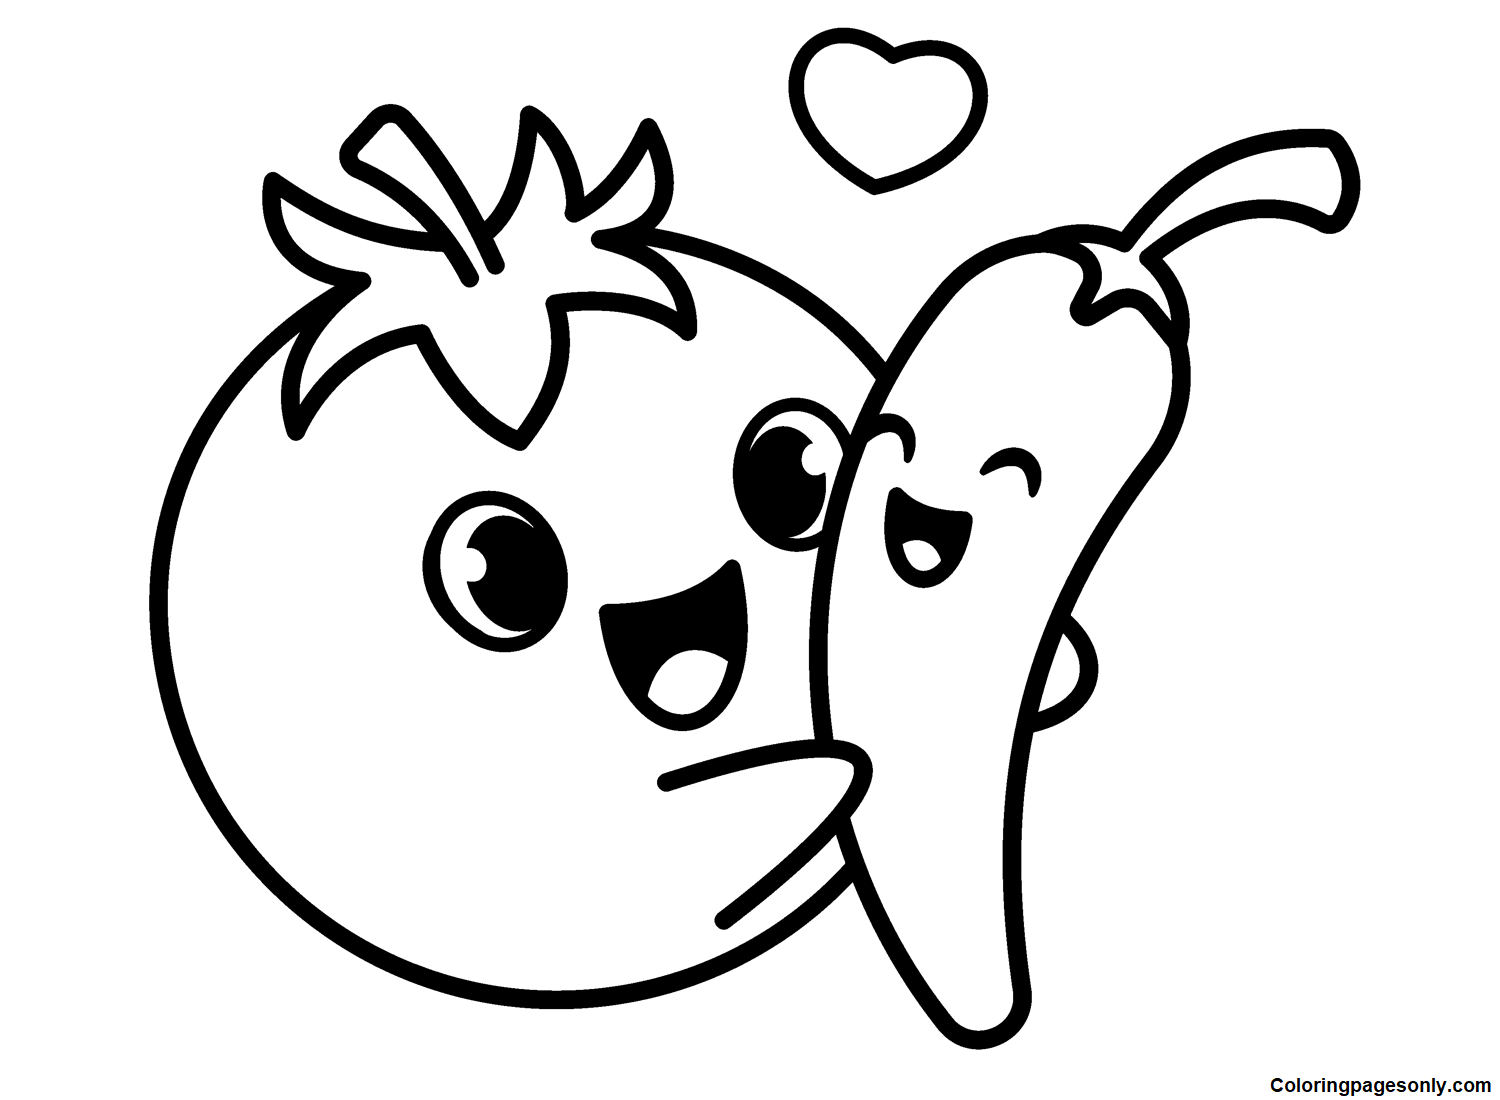 Cute Tomato hug Chili Couple Cartoon Coloring Page